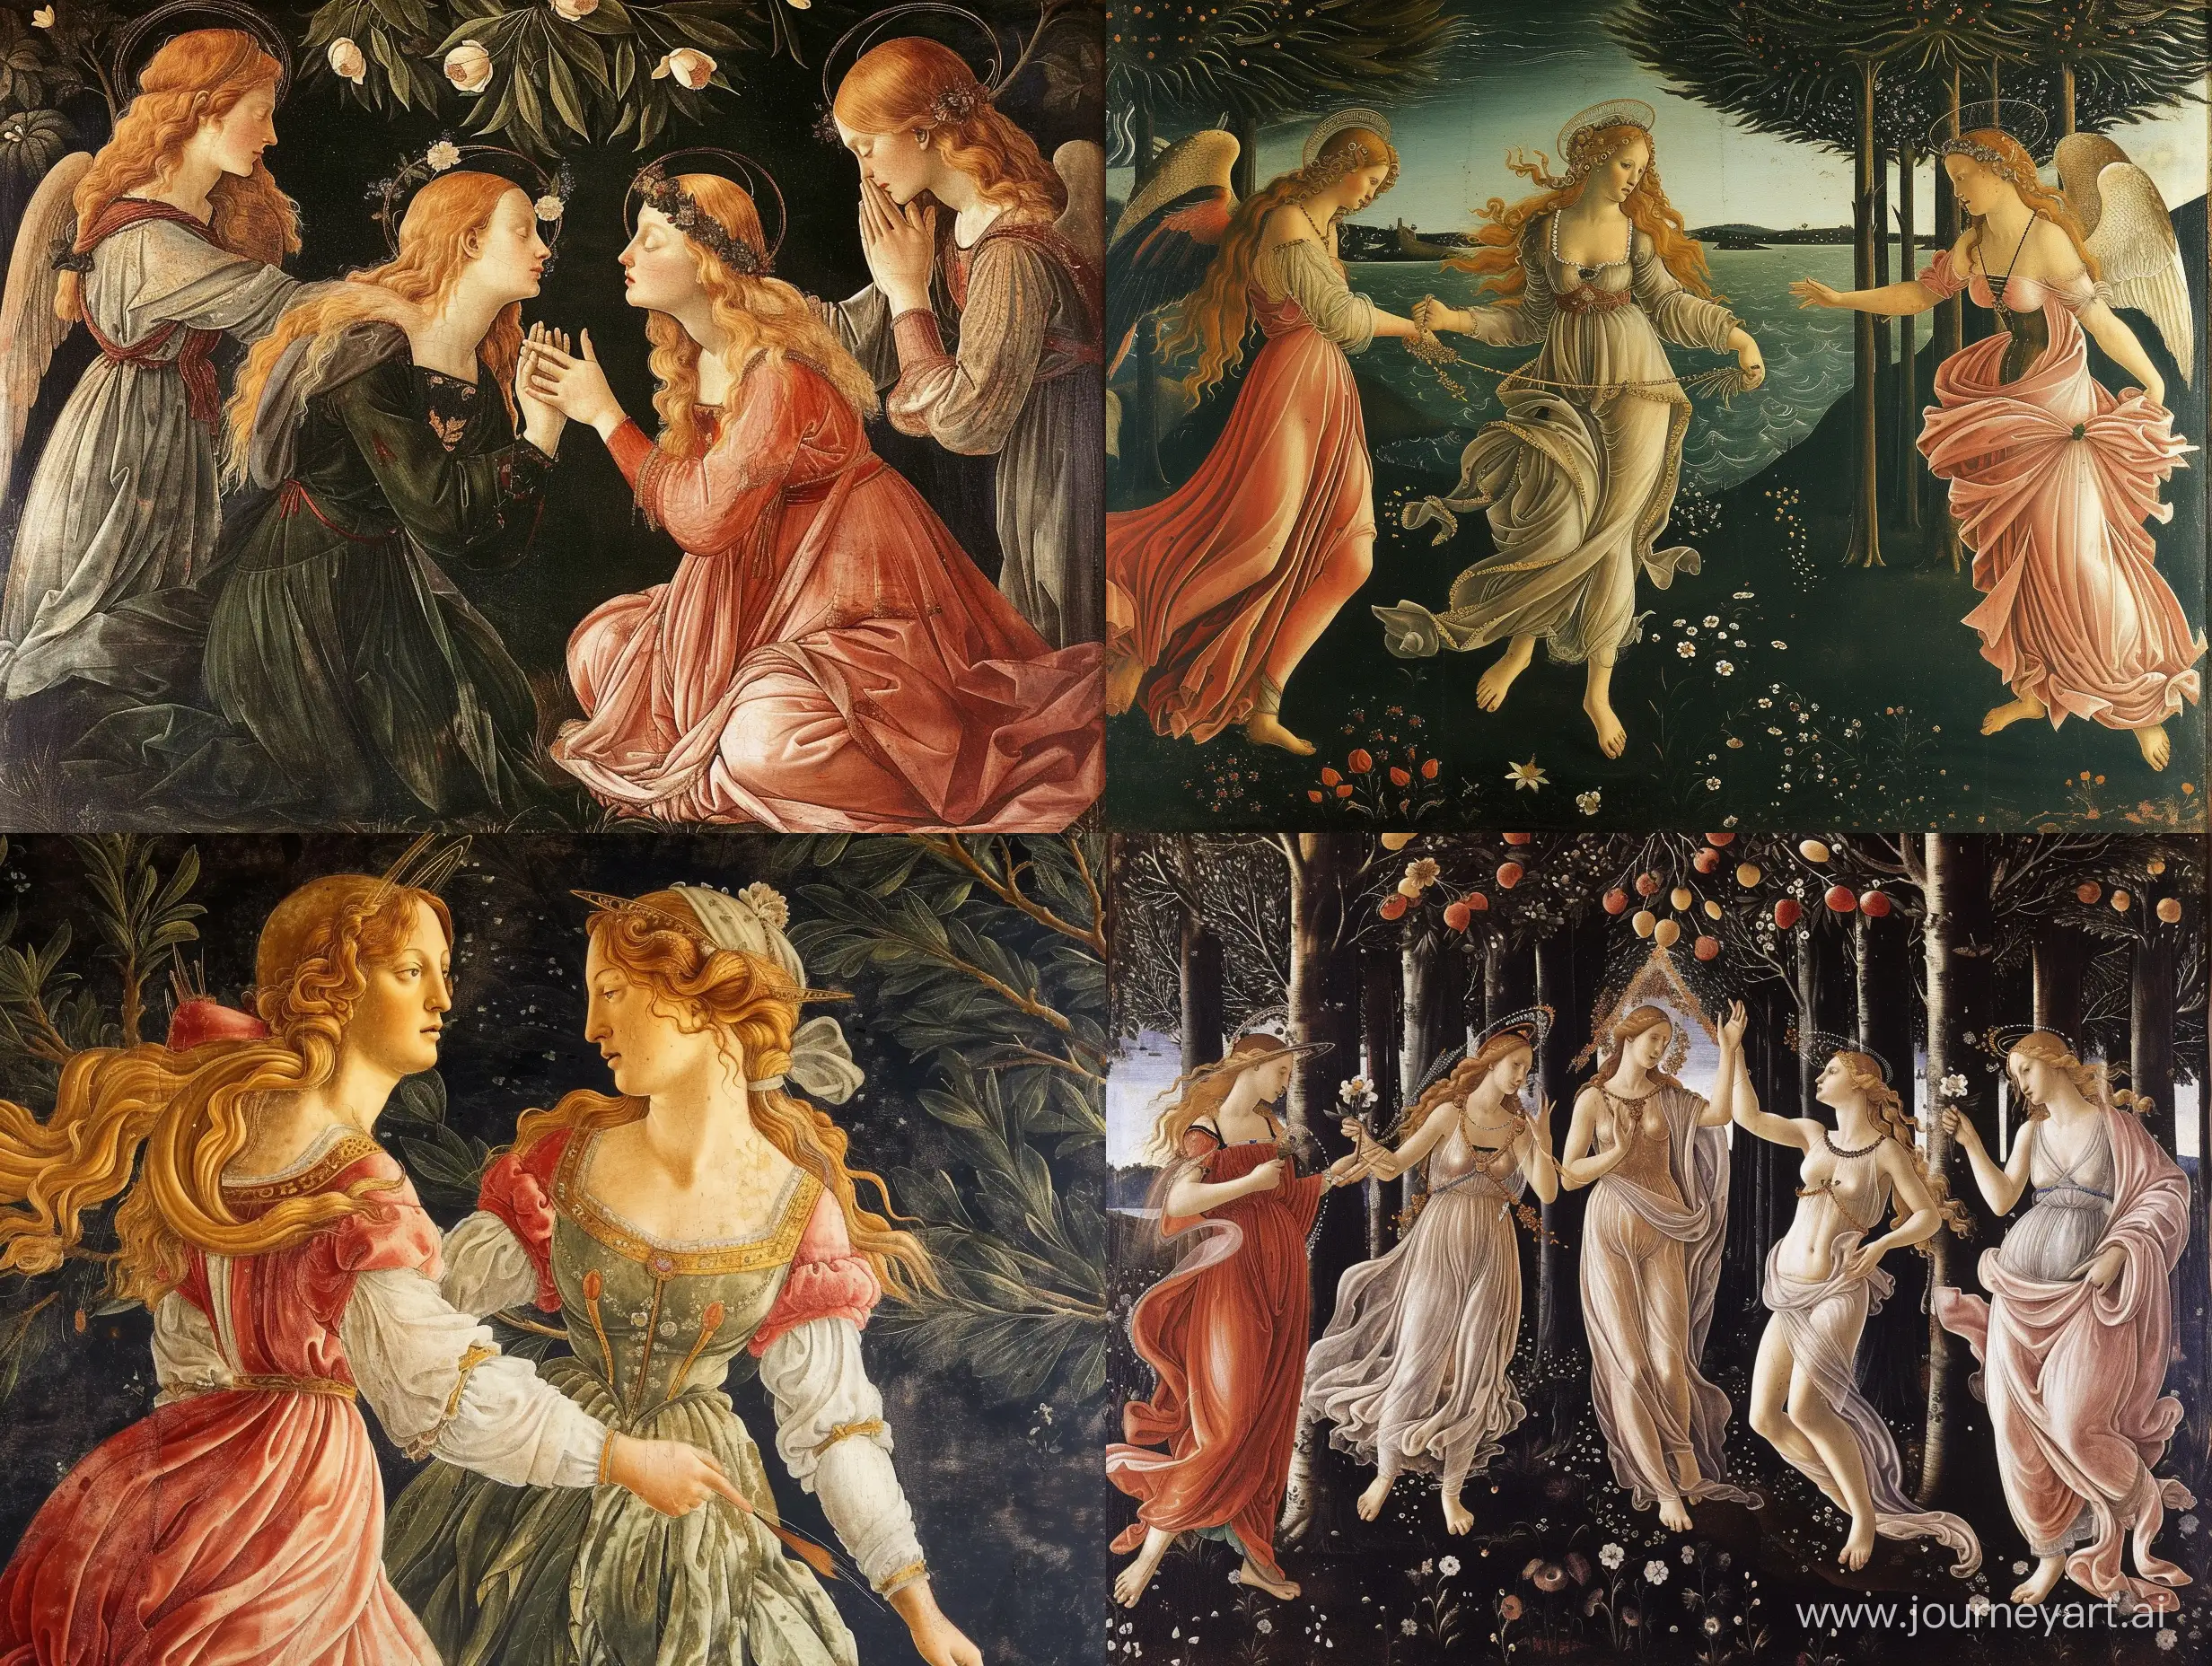 Renaissance painting in Sandro Botticelli style, new york
